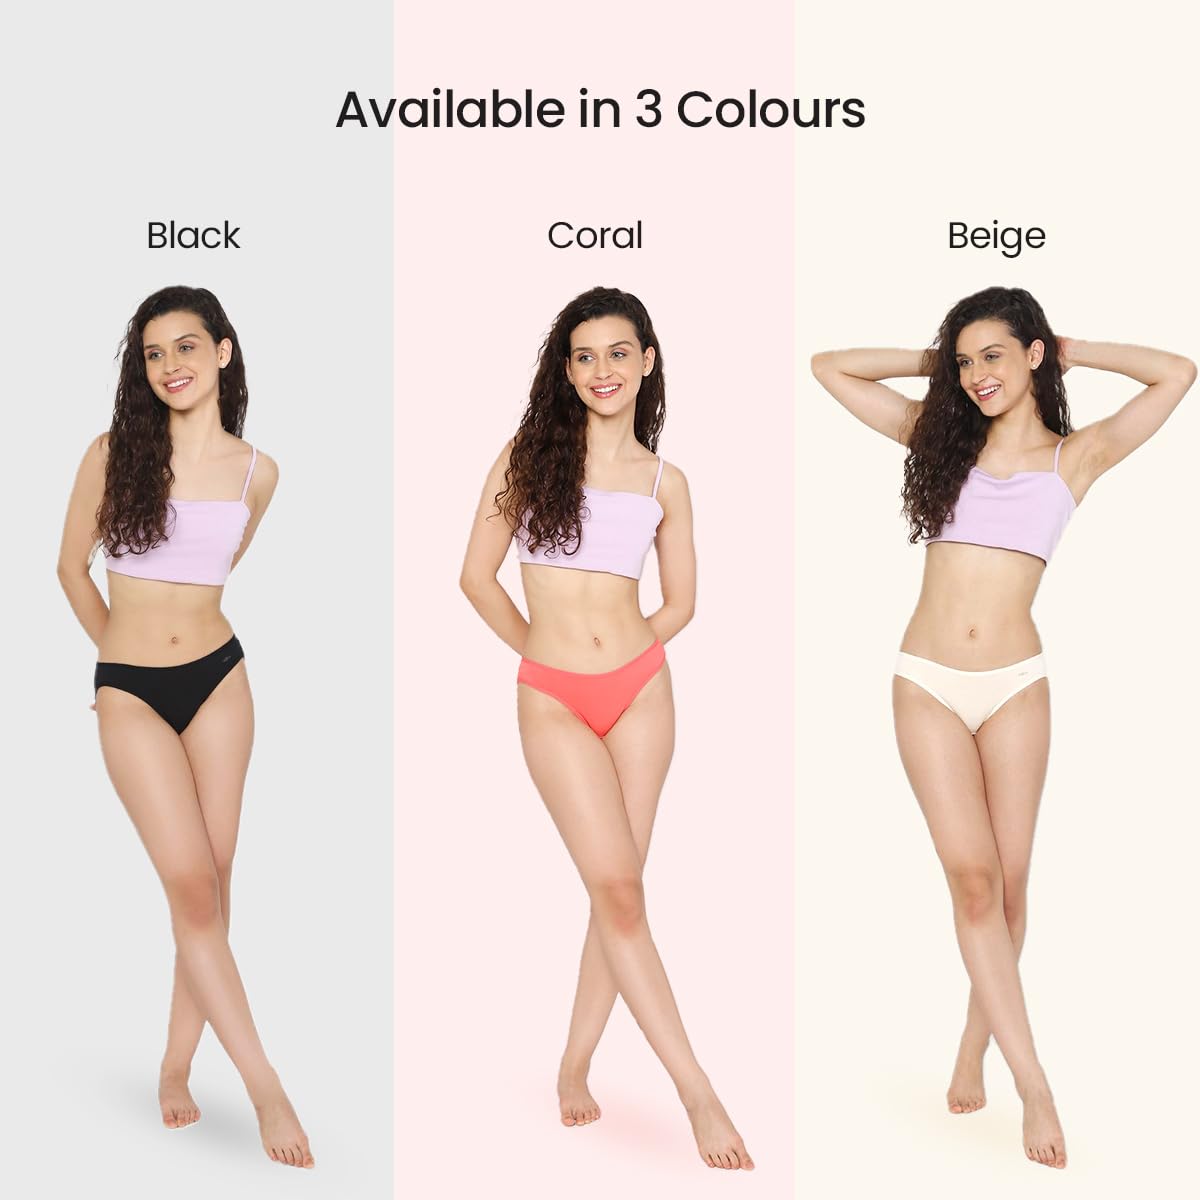 Mush Womens Ultra Soft Bamboo Modal Bikini Brief || Breathable Panties || Anti-Odor, Seamless, Anti Microbial Innerwear Pack of 3 (S, Black)